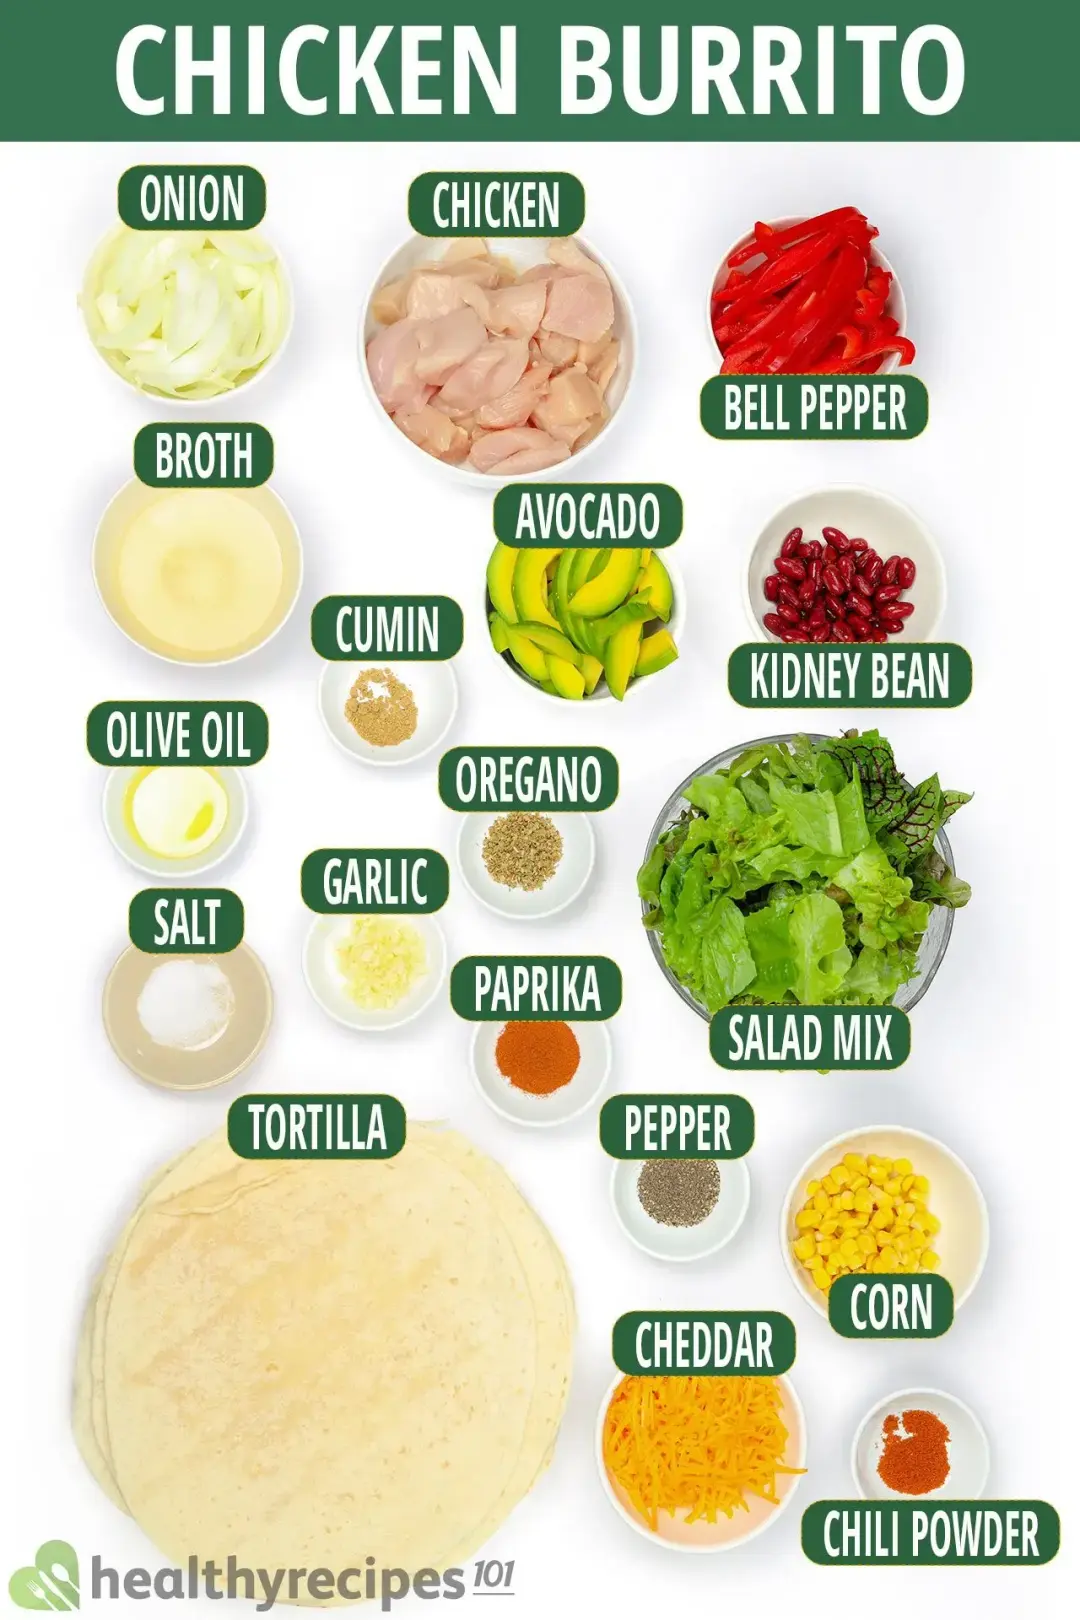 Ingredients for Chicken Burrito